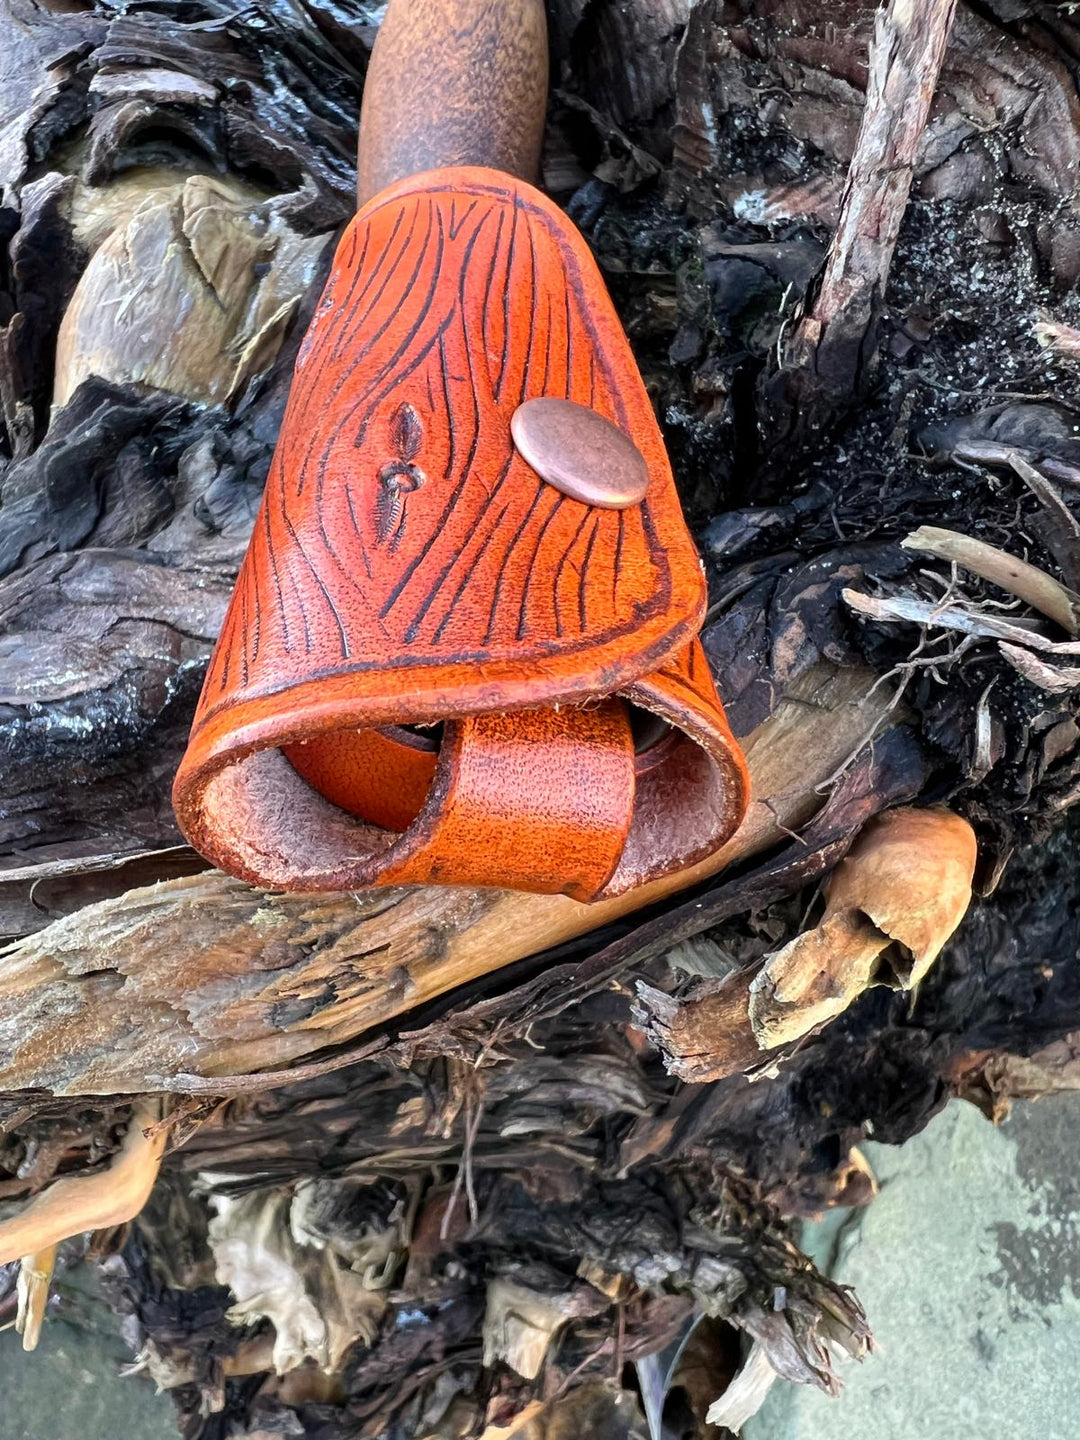 Mora Spoon or Hook Knife Handmade Leather case